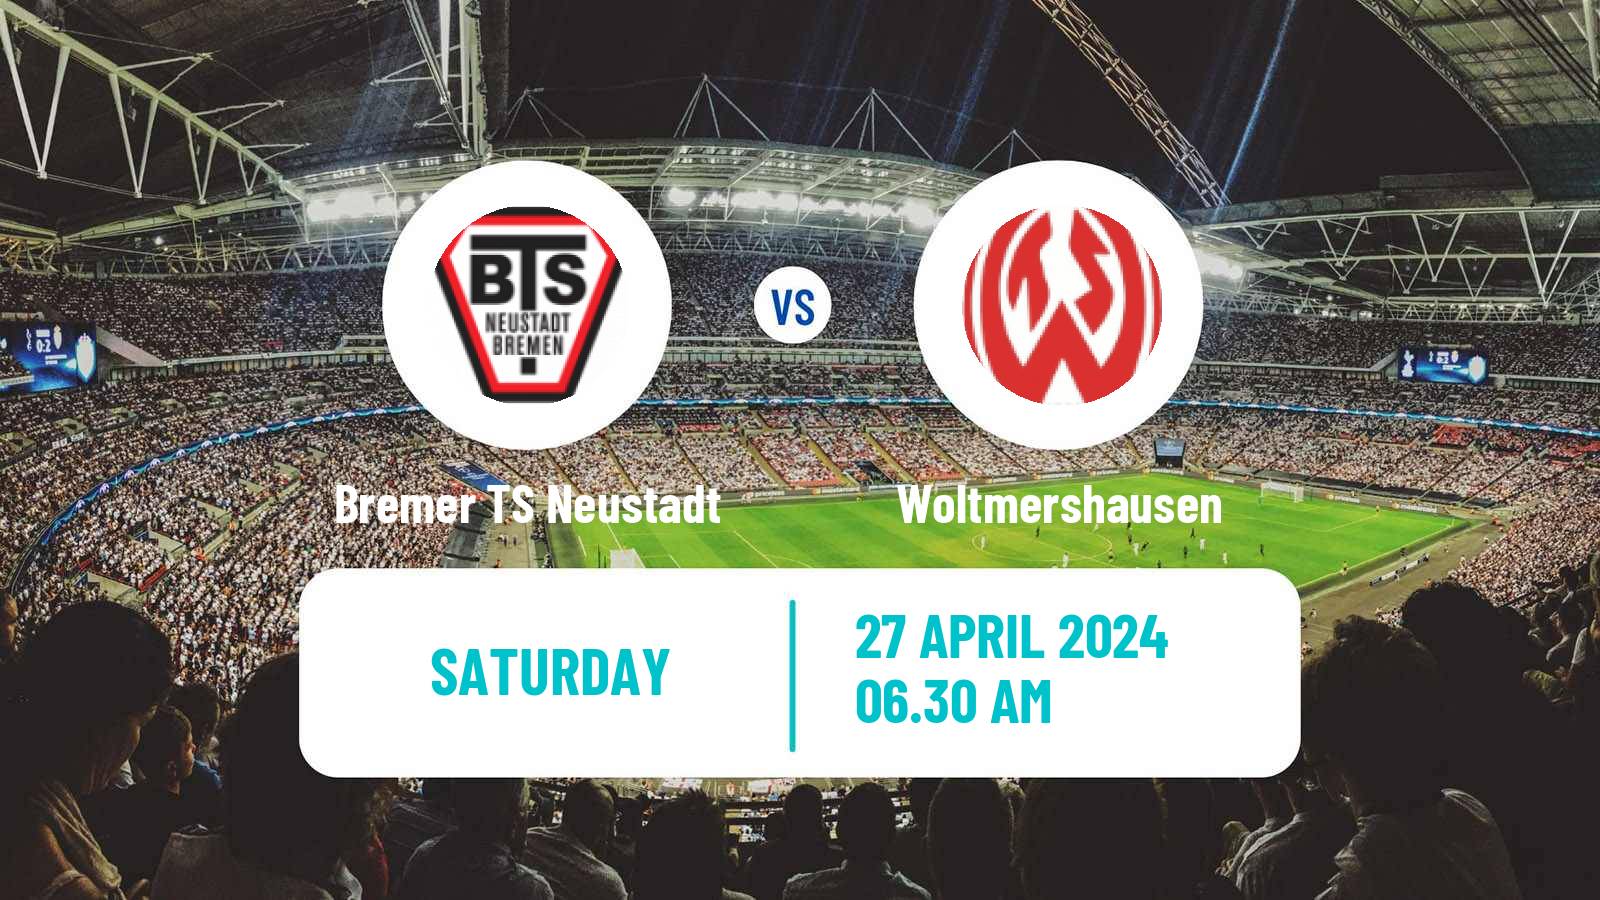 Soccer German Oberliga Bremen Bremer TS Neustadt - Woltmershausen